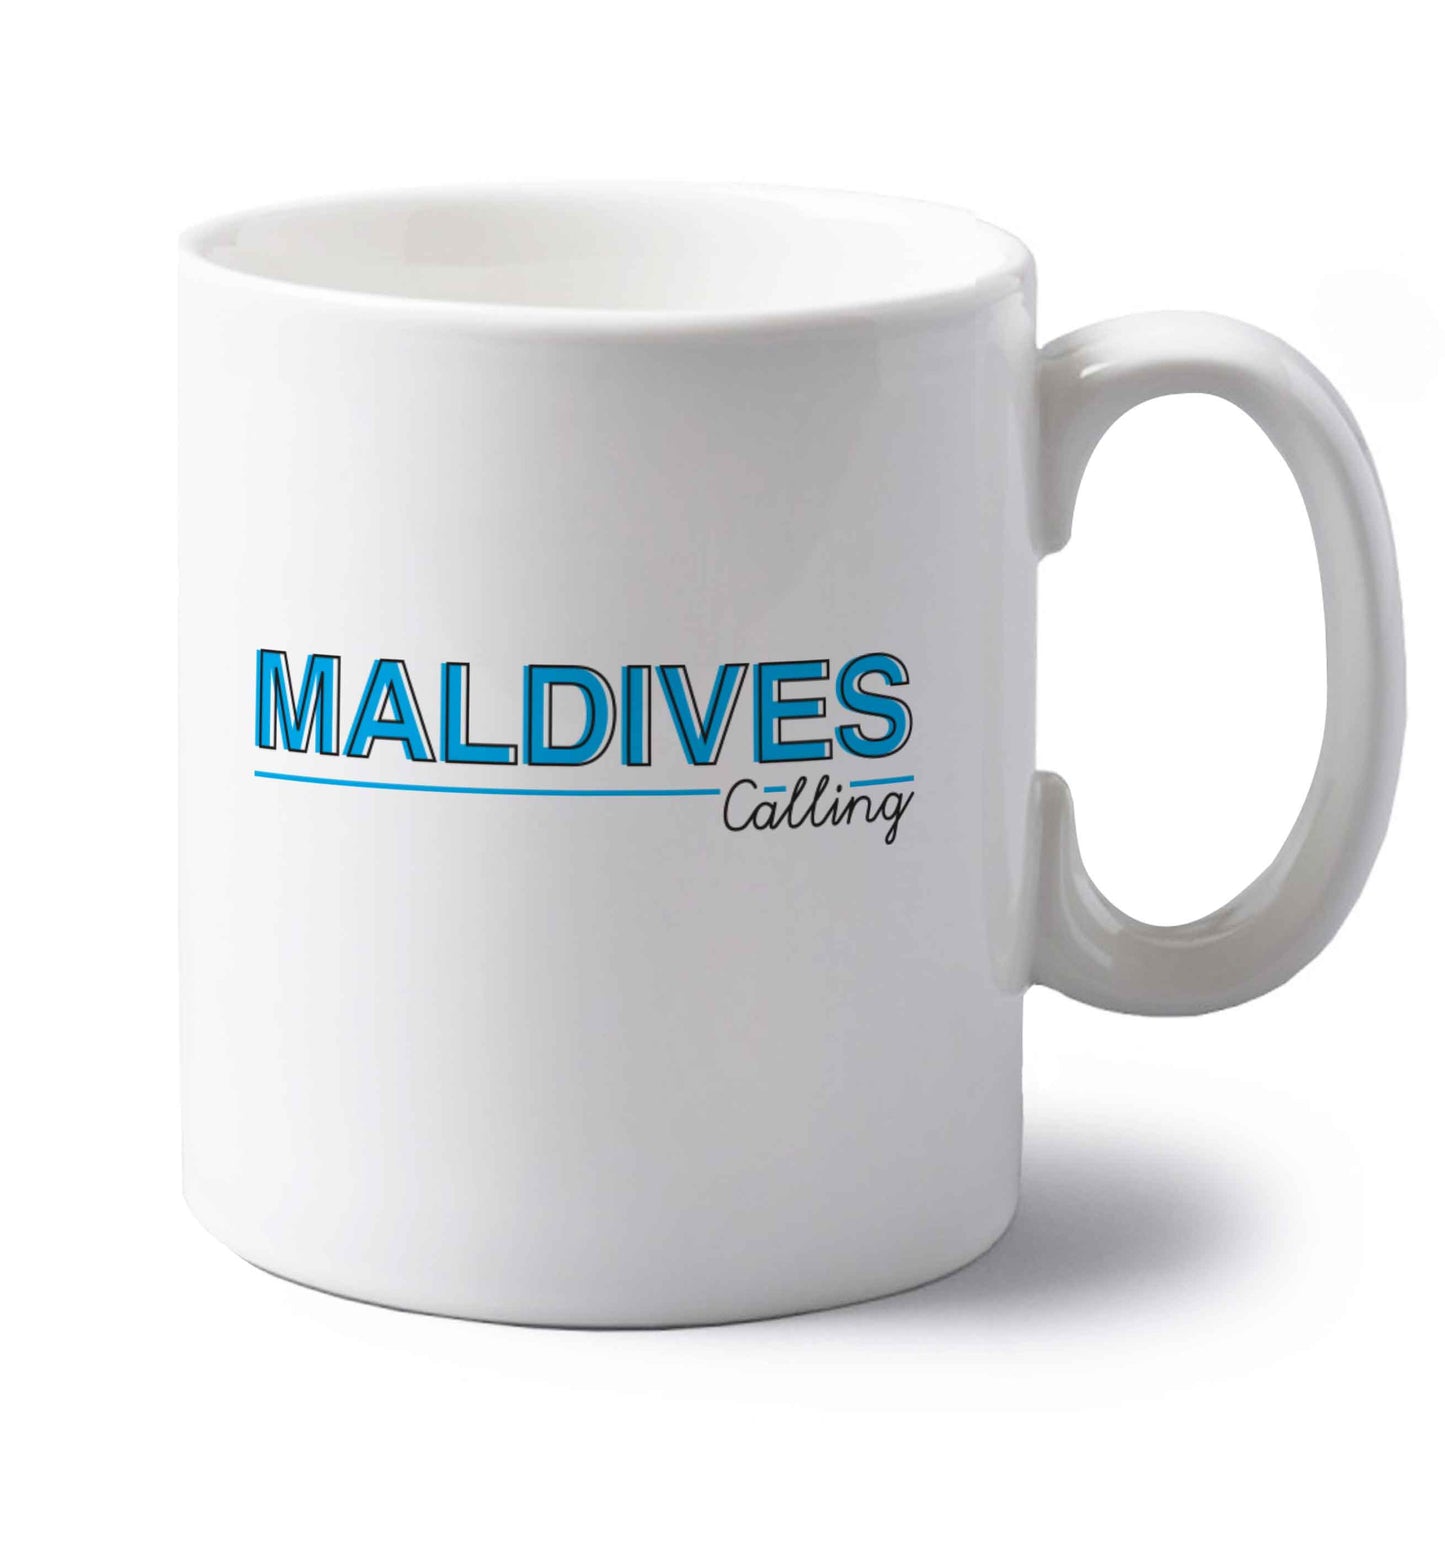 Maldives calling left handed white ceramic mug 